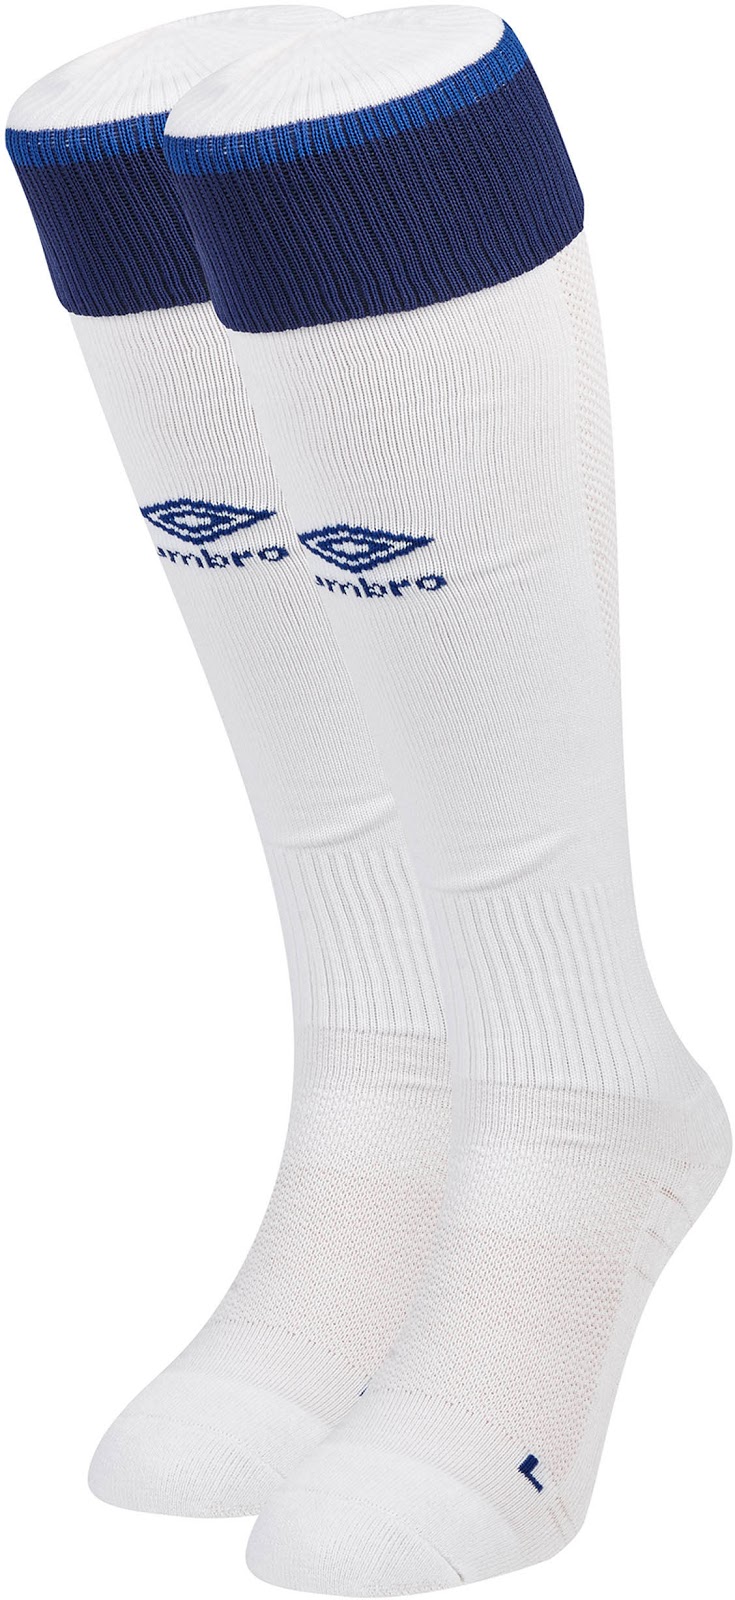 everton-17-18-home-kit-socks